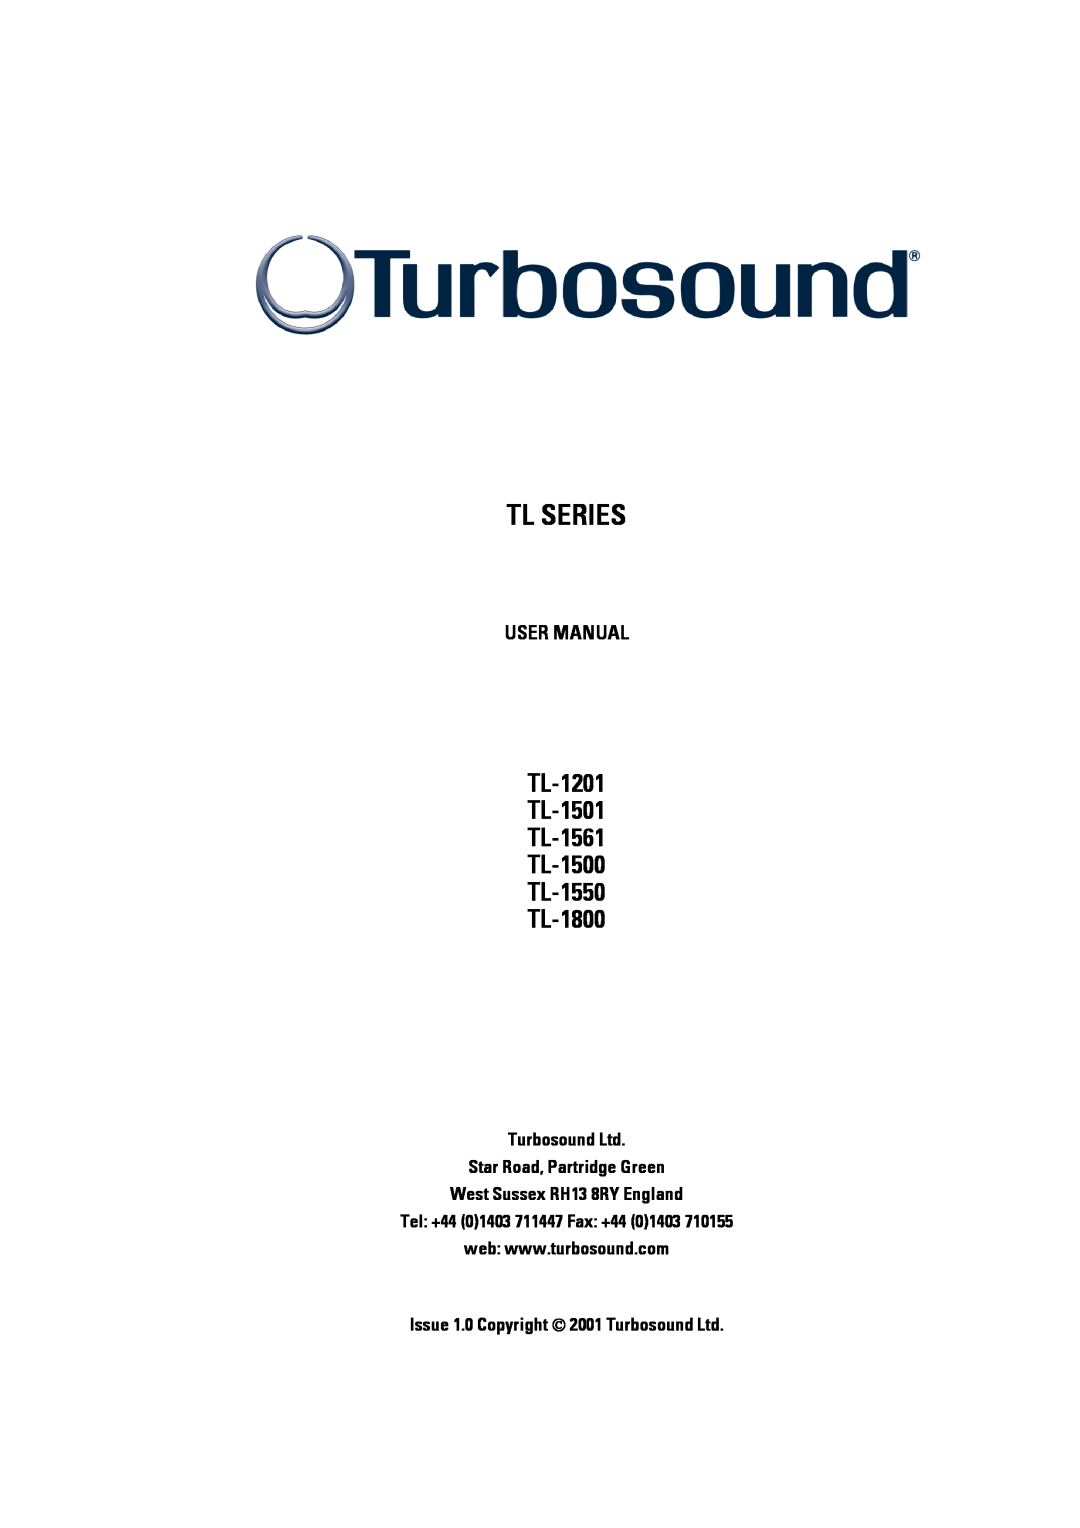 Turbosound TL-1800 user manual Star Road, Partridge Green West Sussex RH13 8RY England, Tel +44 01403 711447 Fax +44 